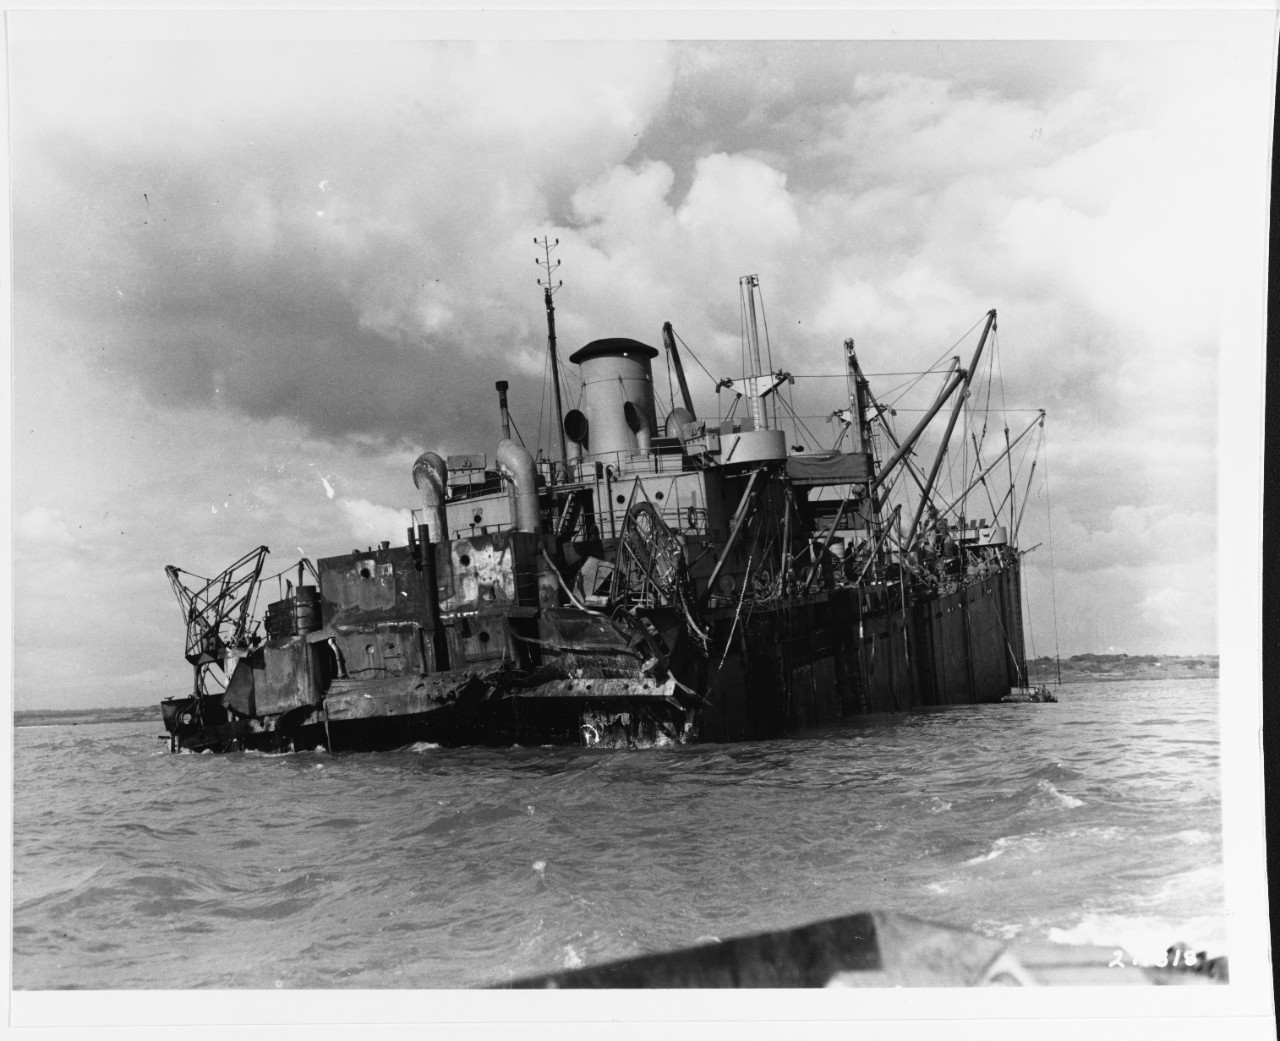 S.S. ELIHU YALE ("Liberty Ship") off the Anzio Beachhead, March 2, 1944